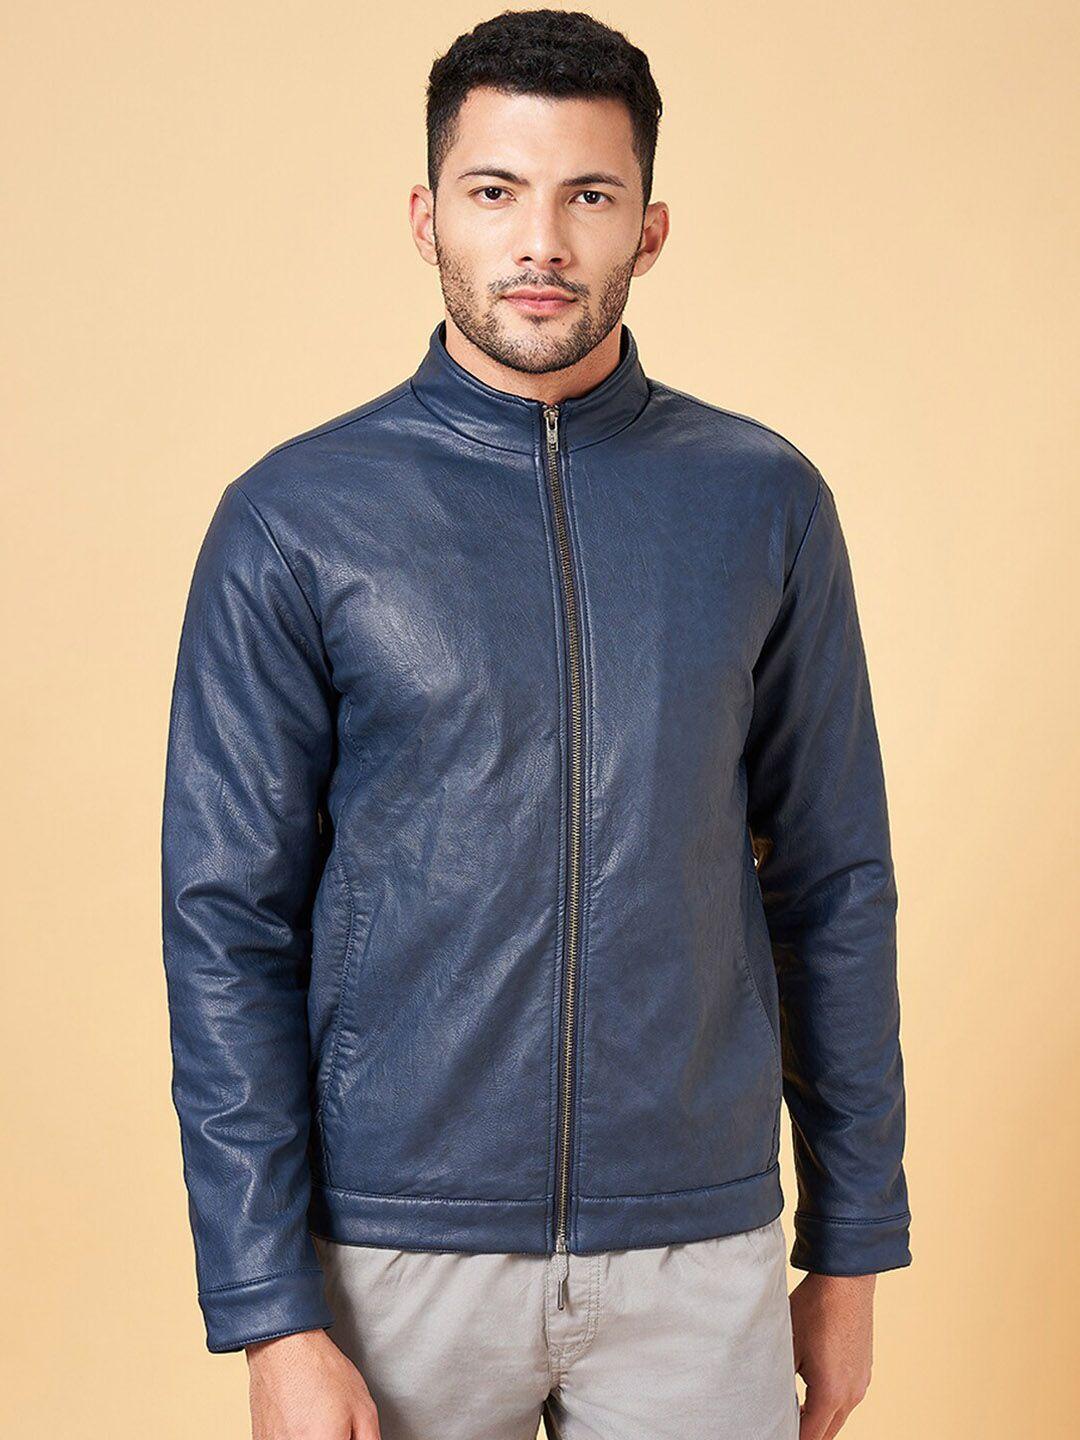 urban-ranger-by-pantaloons-mock-collar-leather-jacket